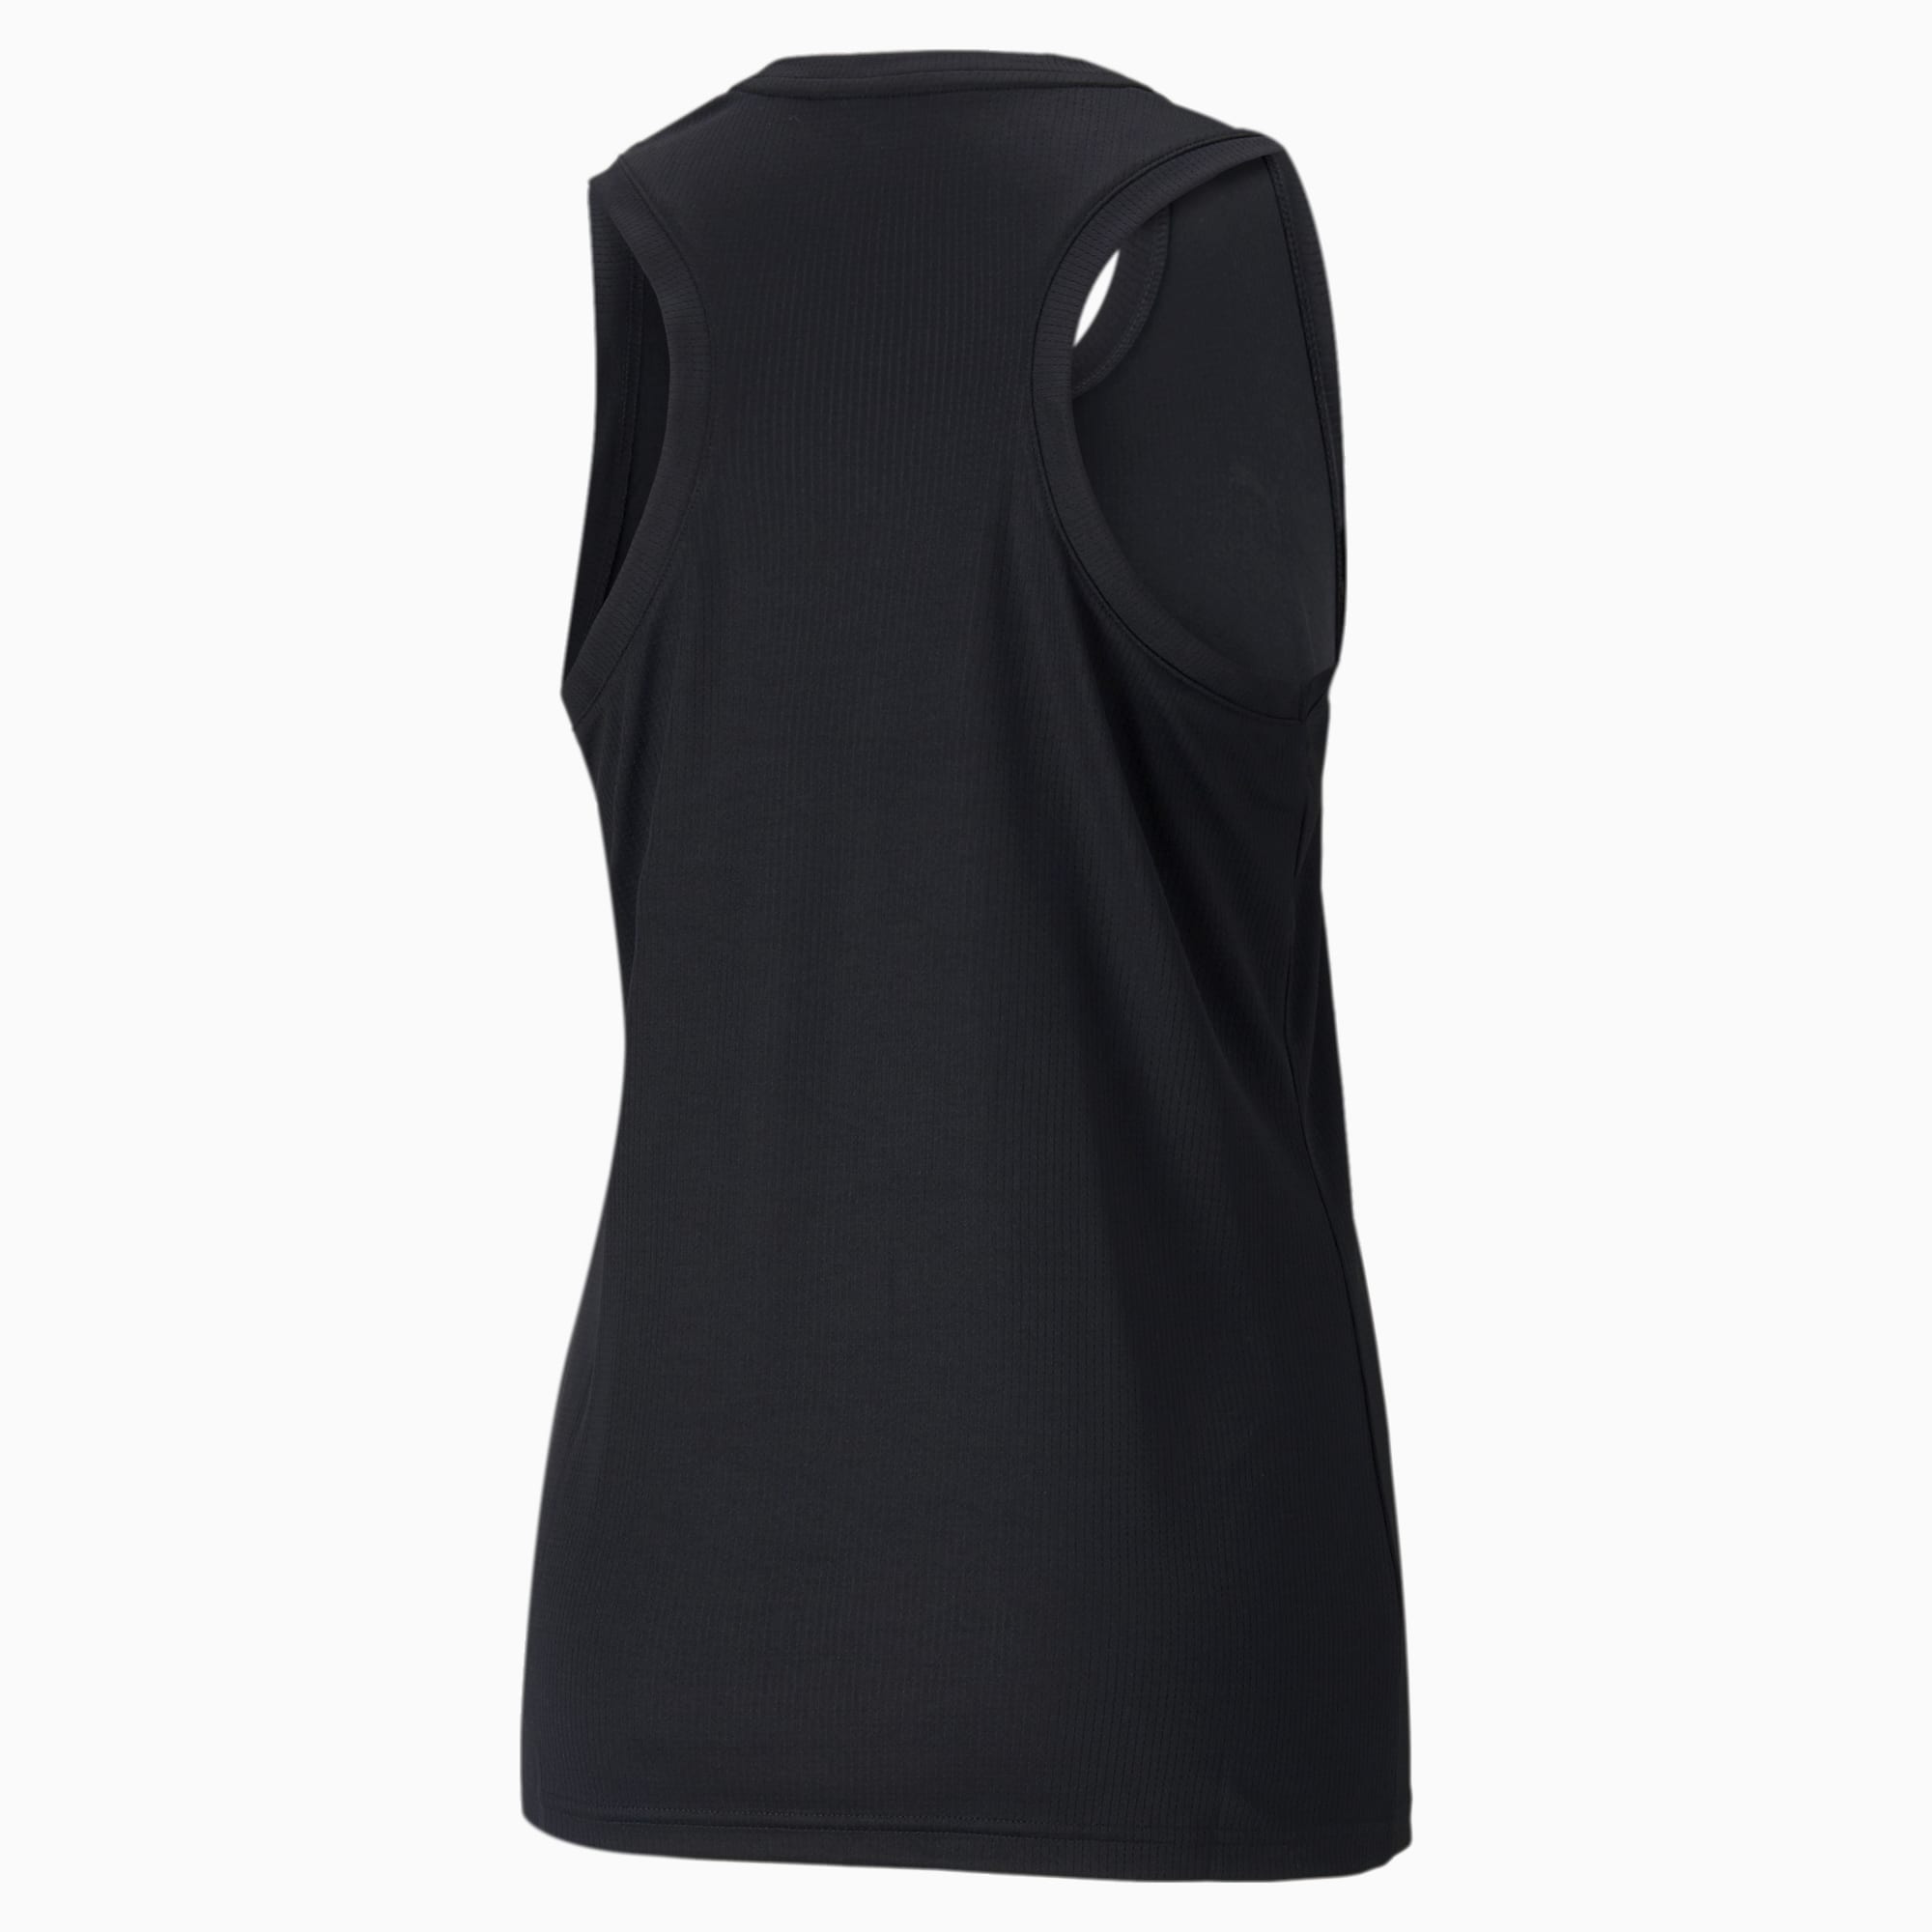 PUMA Performance Women's Training Tank Top Shirt, Black, Size XS, Clothing